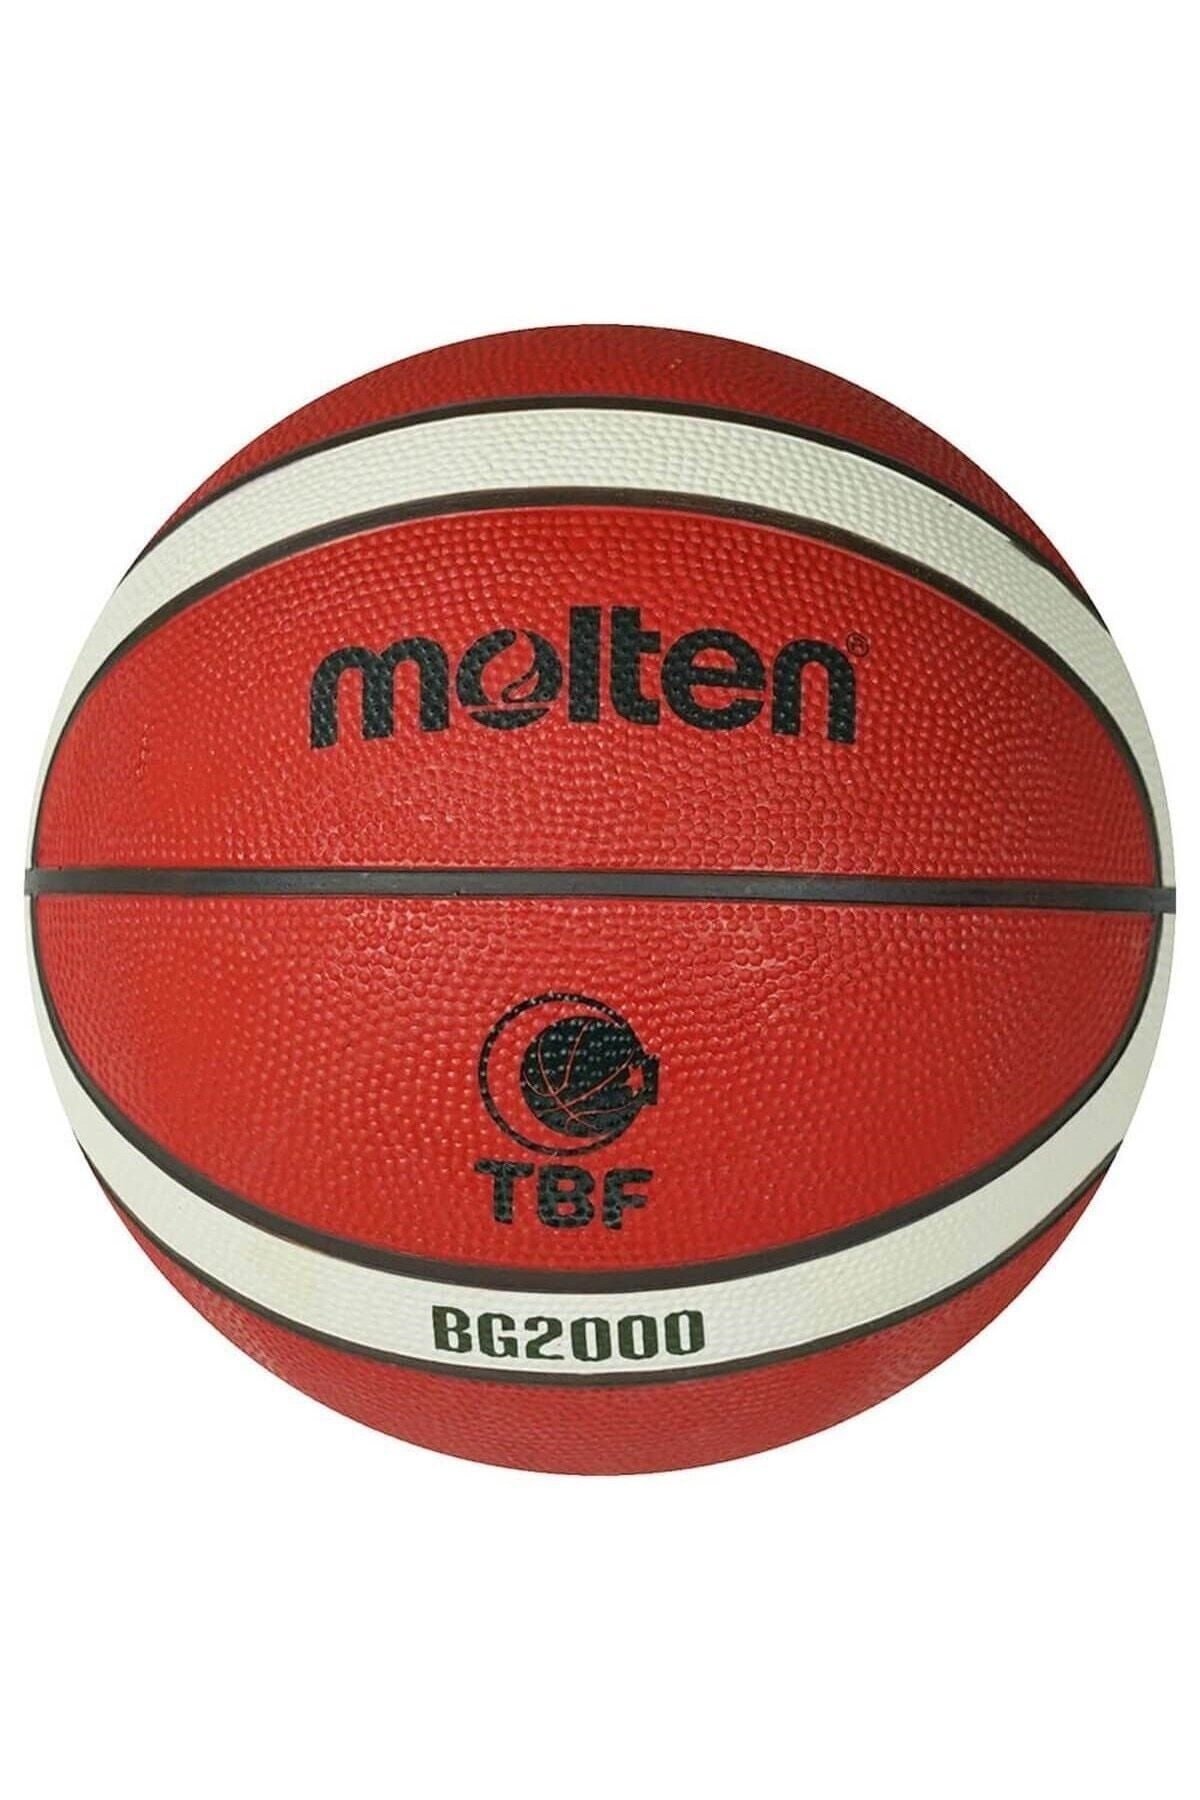 Molten B6g2000 Fıba Onaylı Kauçuk 6 No Basketbol Topu